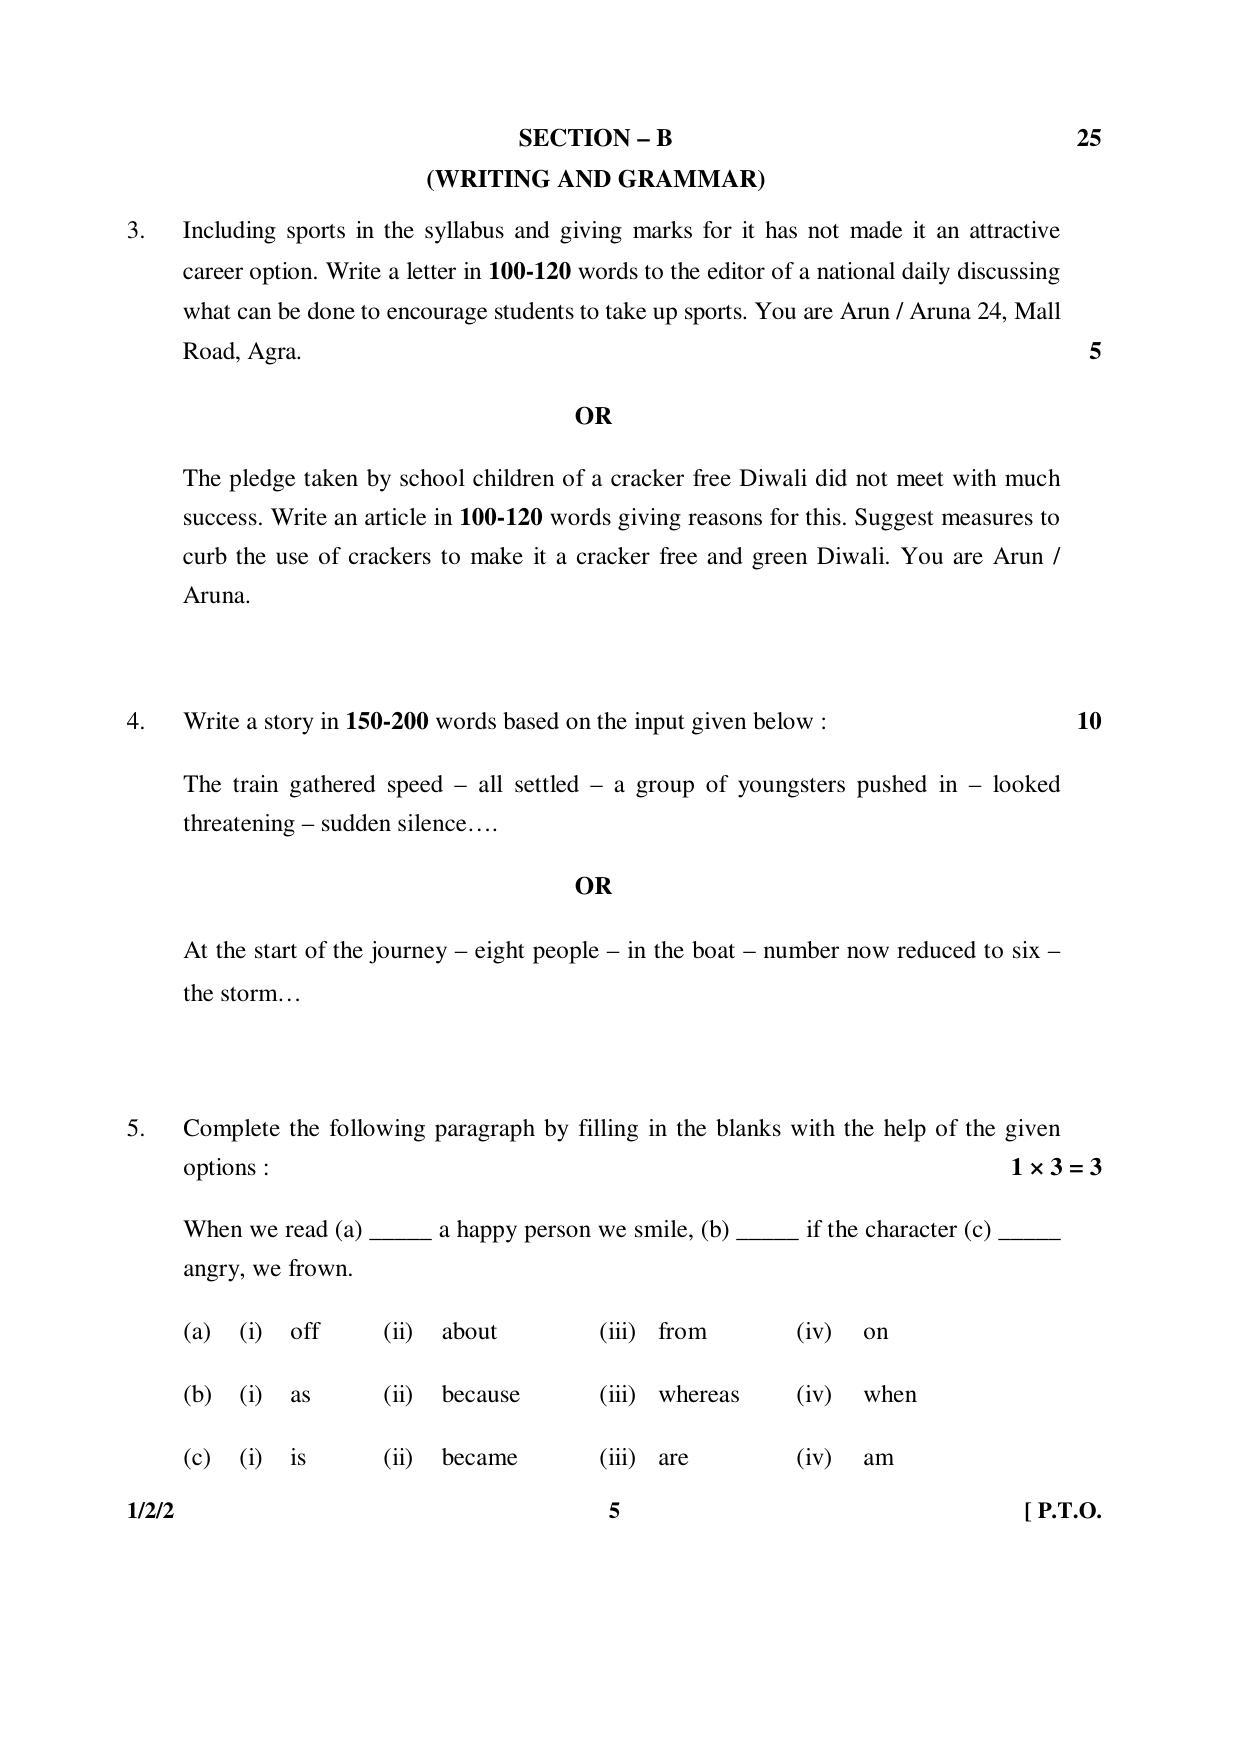 CBSE Class 10 1-2-2 ENGLISH COMMUNICATIVE 2016 Question Paper - Page 5